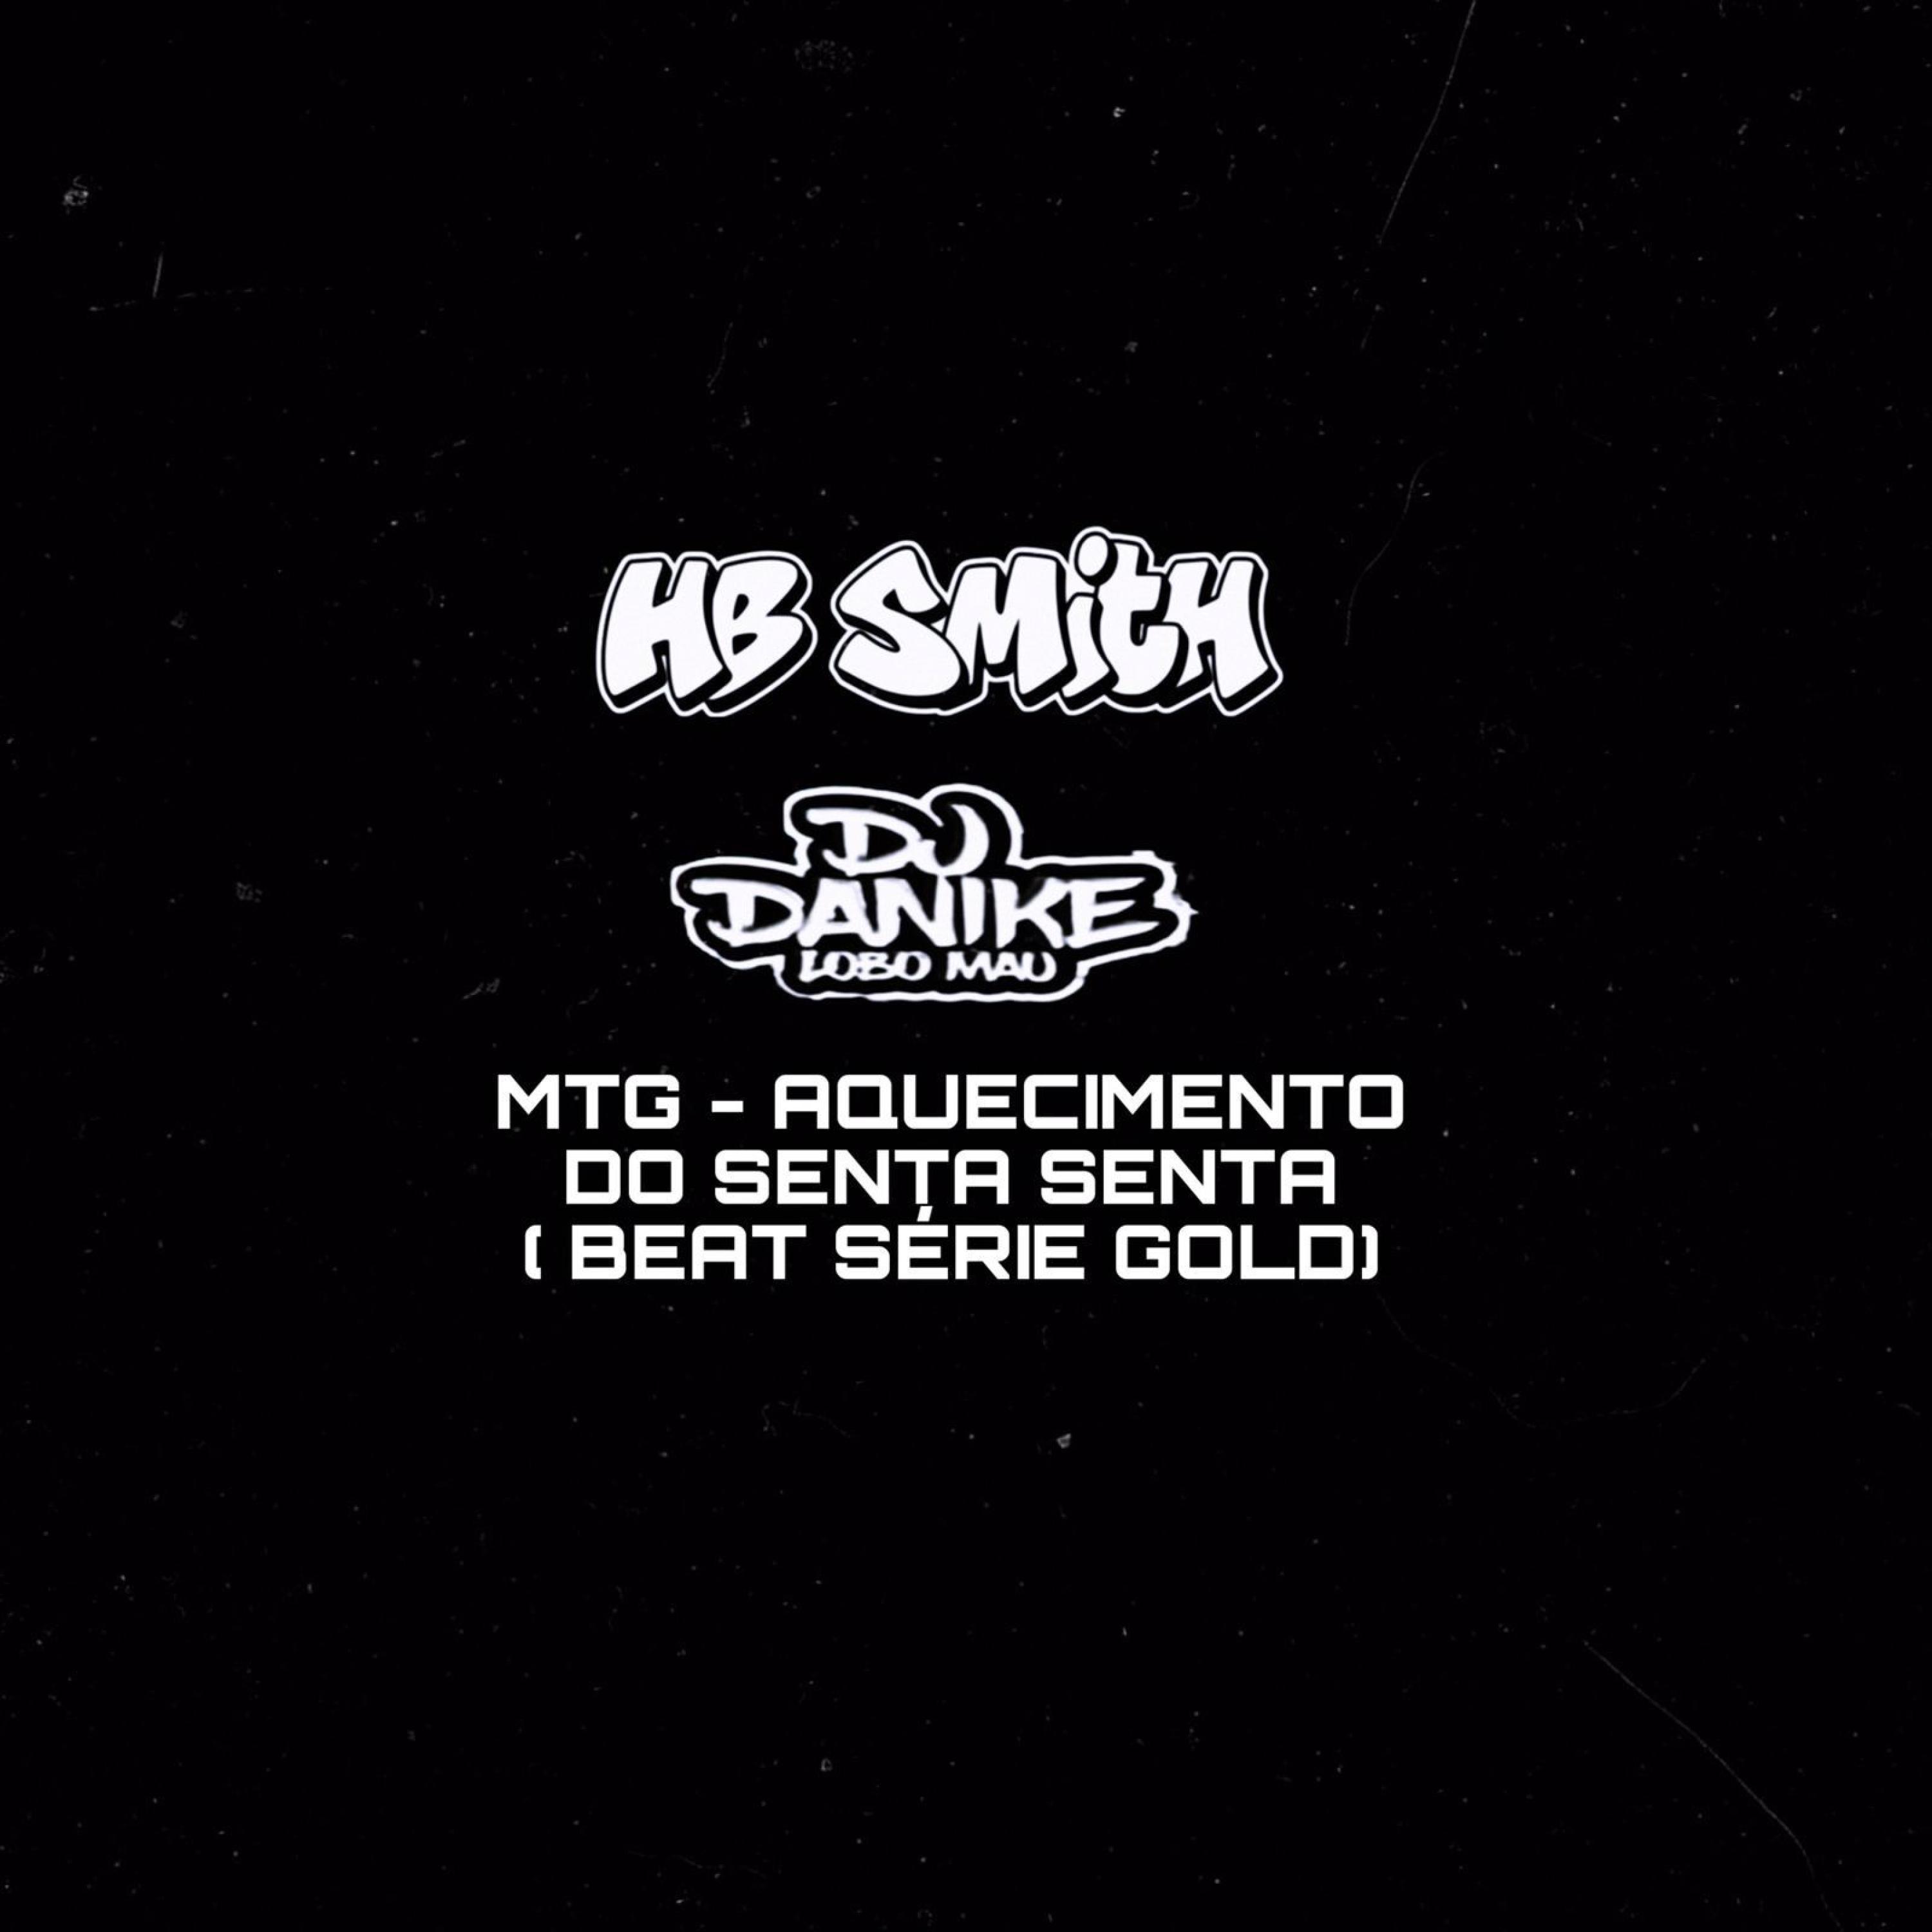 Dj Hb Smith - MTG AQUECIMENTO DO SENTA SENTA (beat serie gold) (feat. DJ DANIKE)